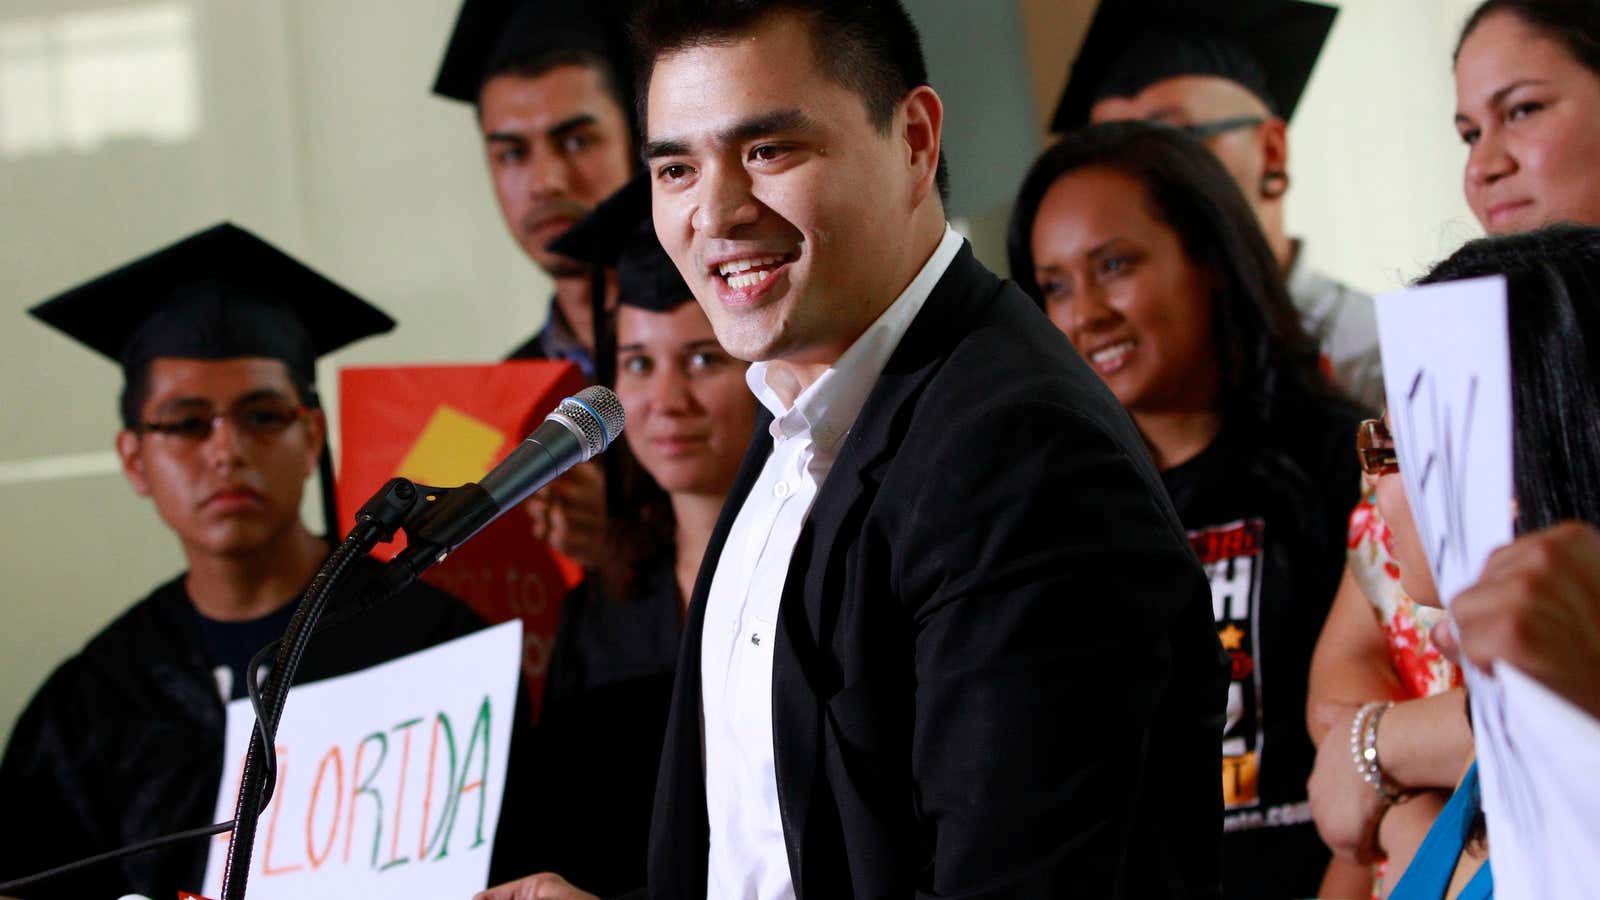 Jose Antonio Vargas spoke at a news conference in 2012.